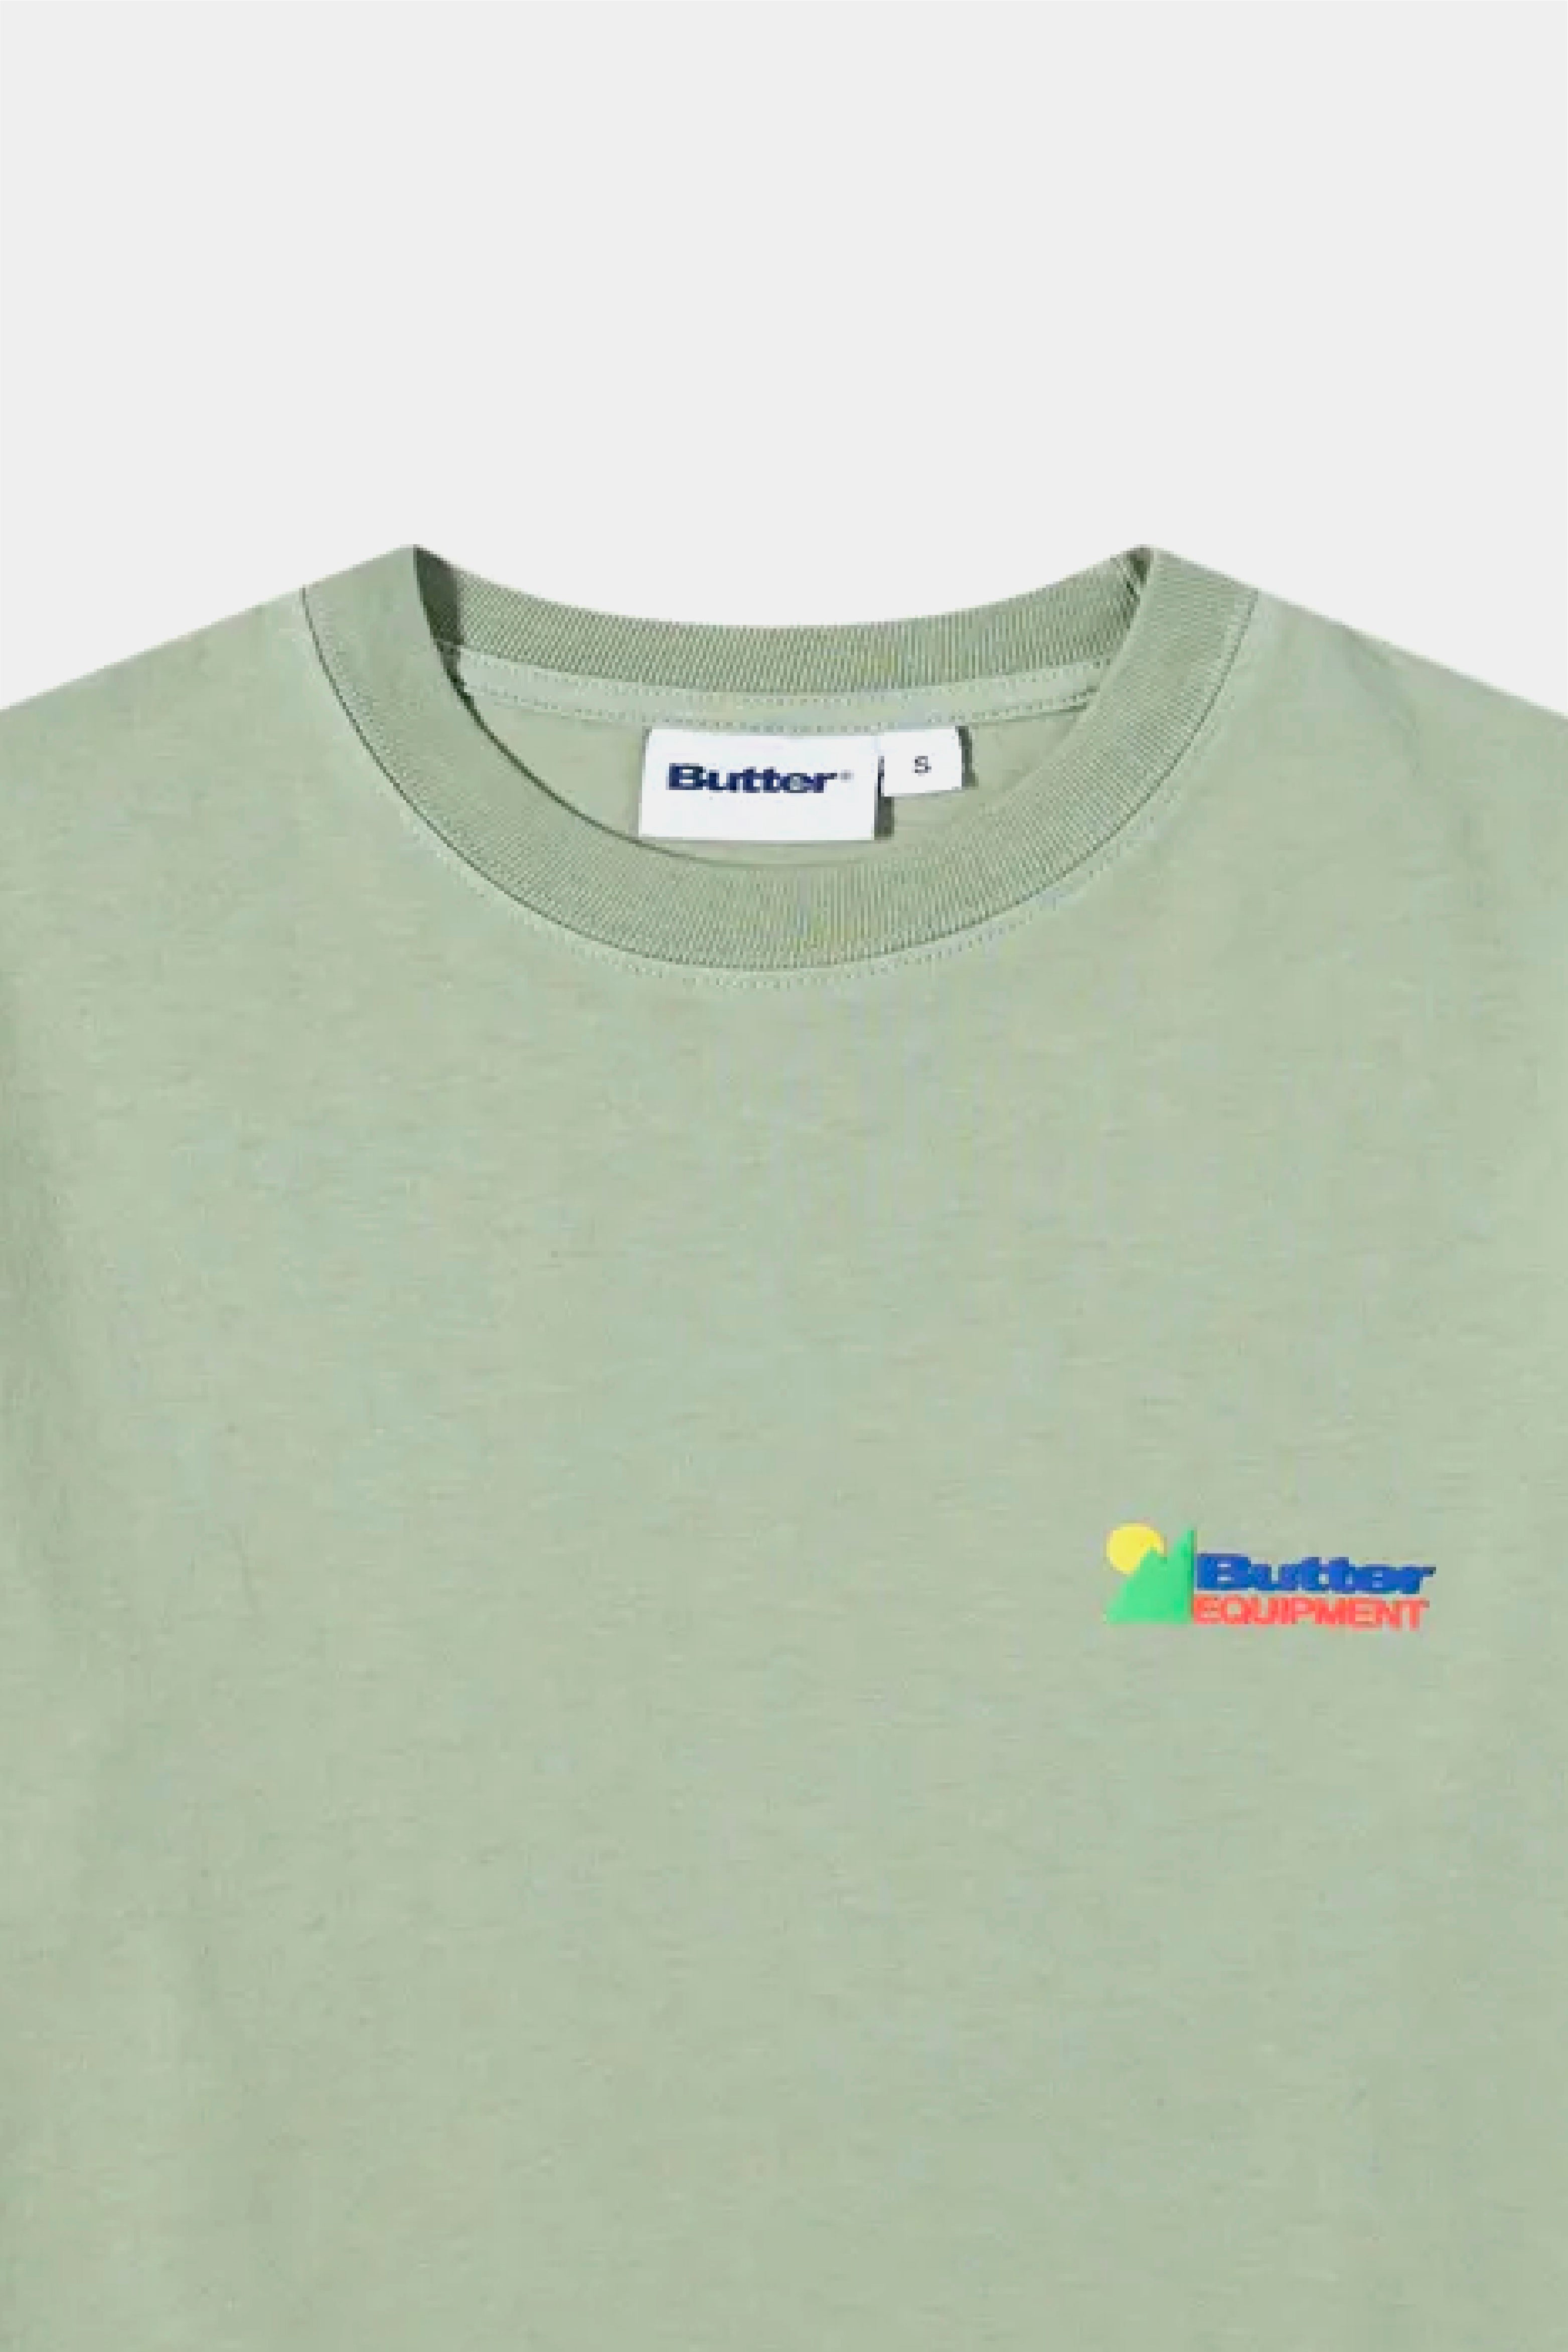 Selectshop FRAME - BUTTER GOODS Equipment Pigment Dye Tee T-Shirts Concept Store Dubai